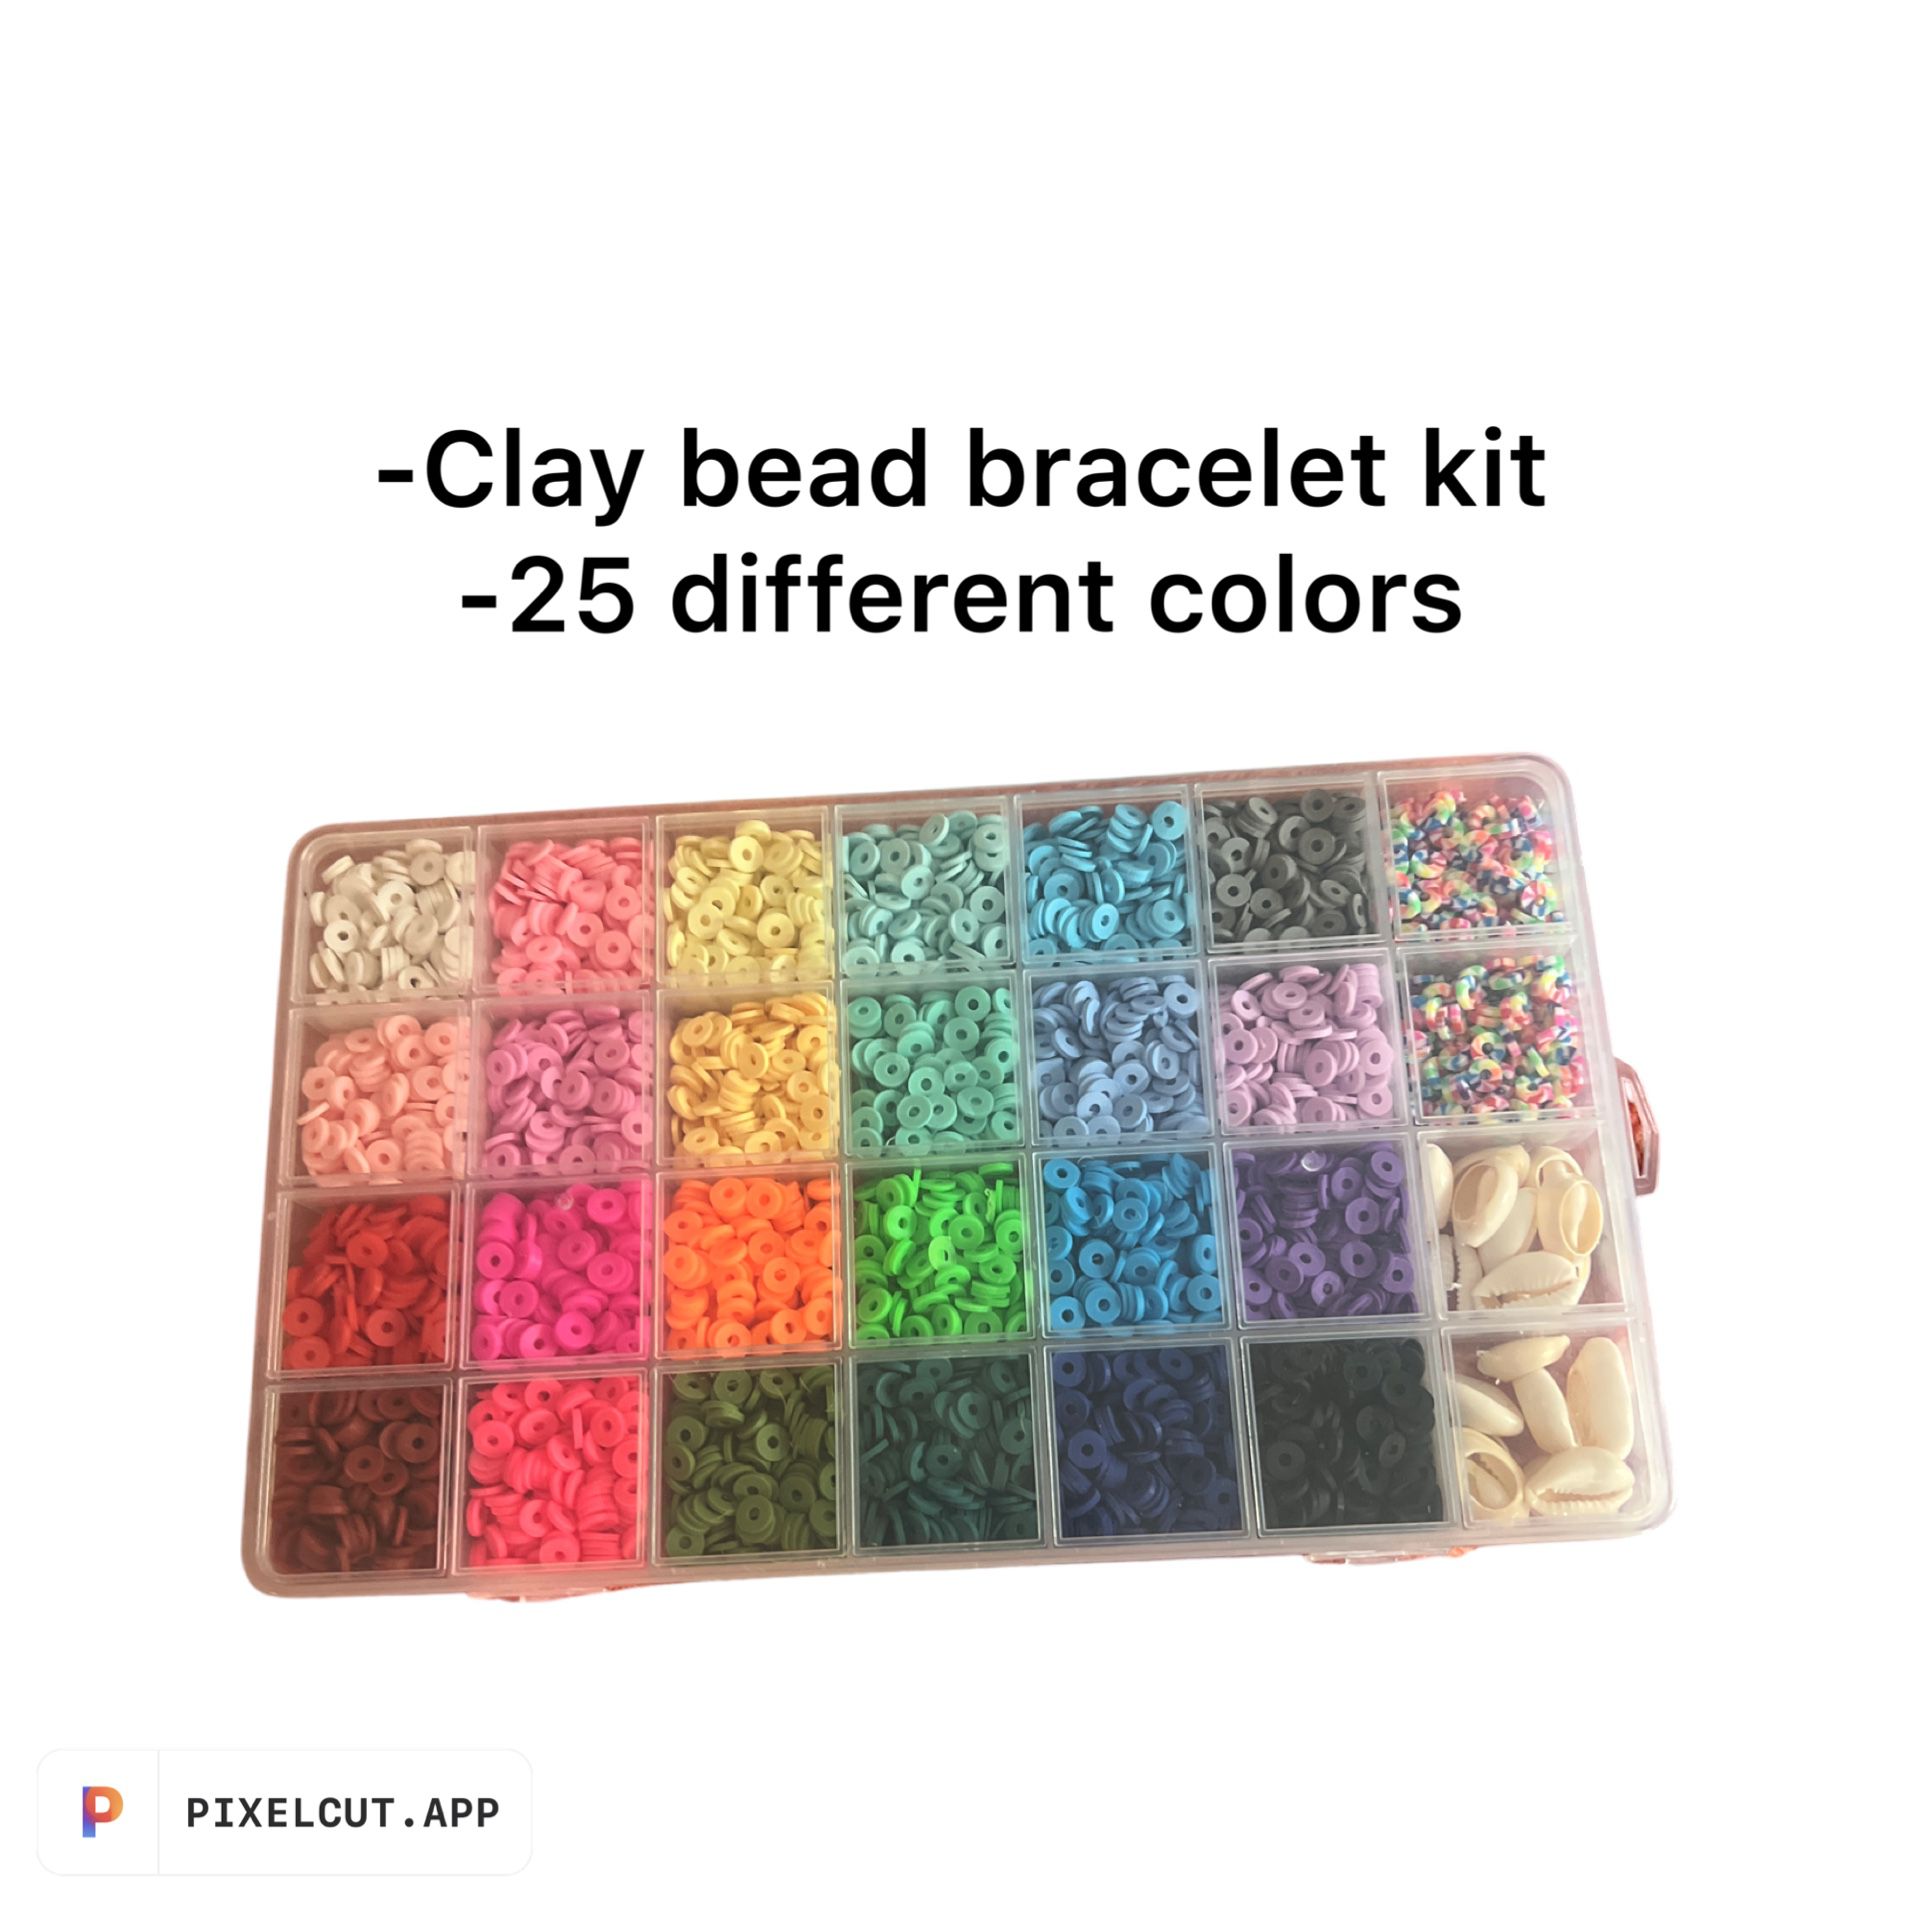 Clay Bead Bracelet Kit